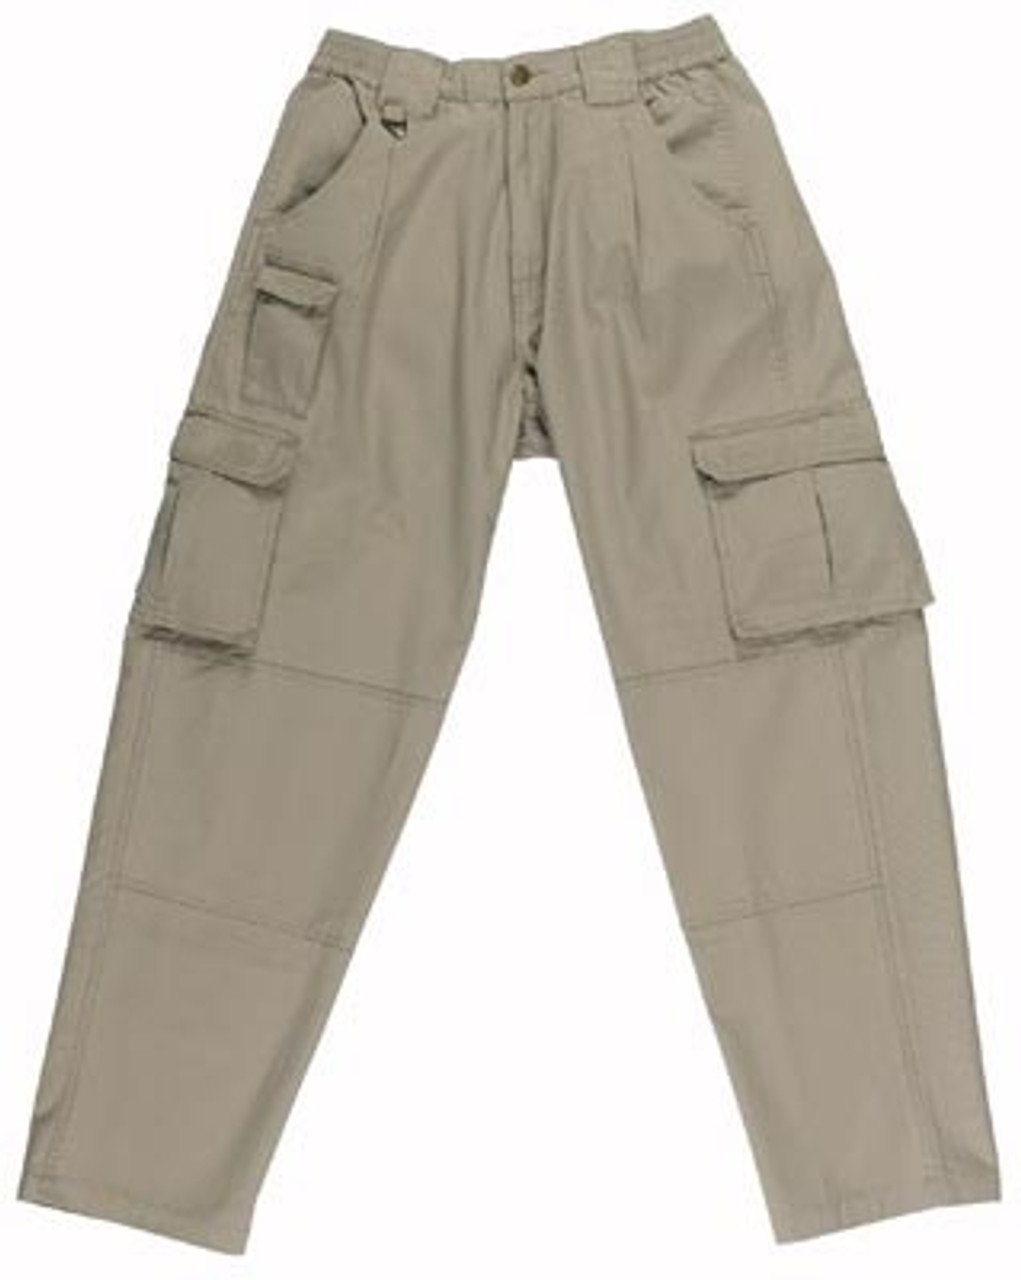 Khaki Tactical Uniform Pant